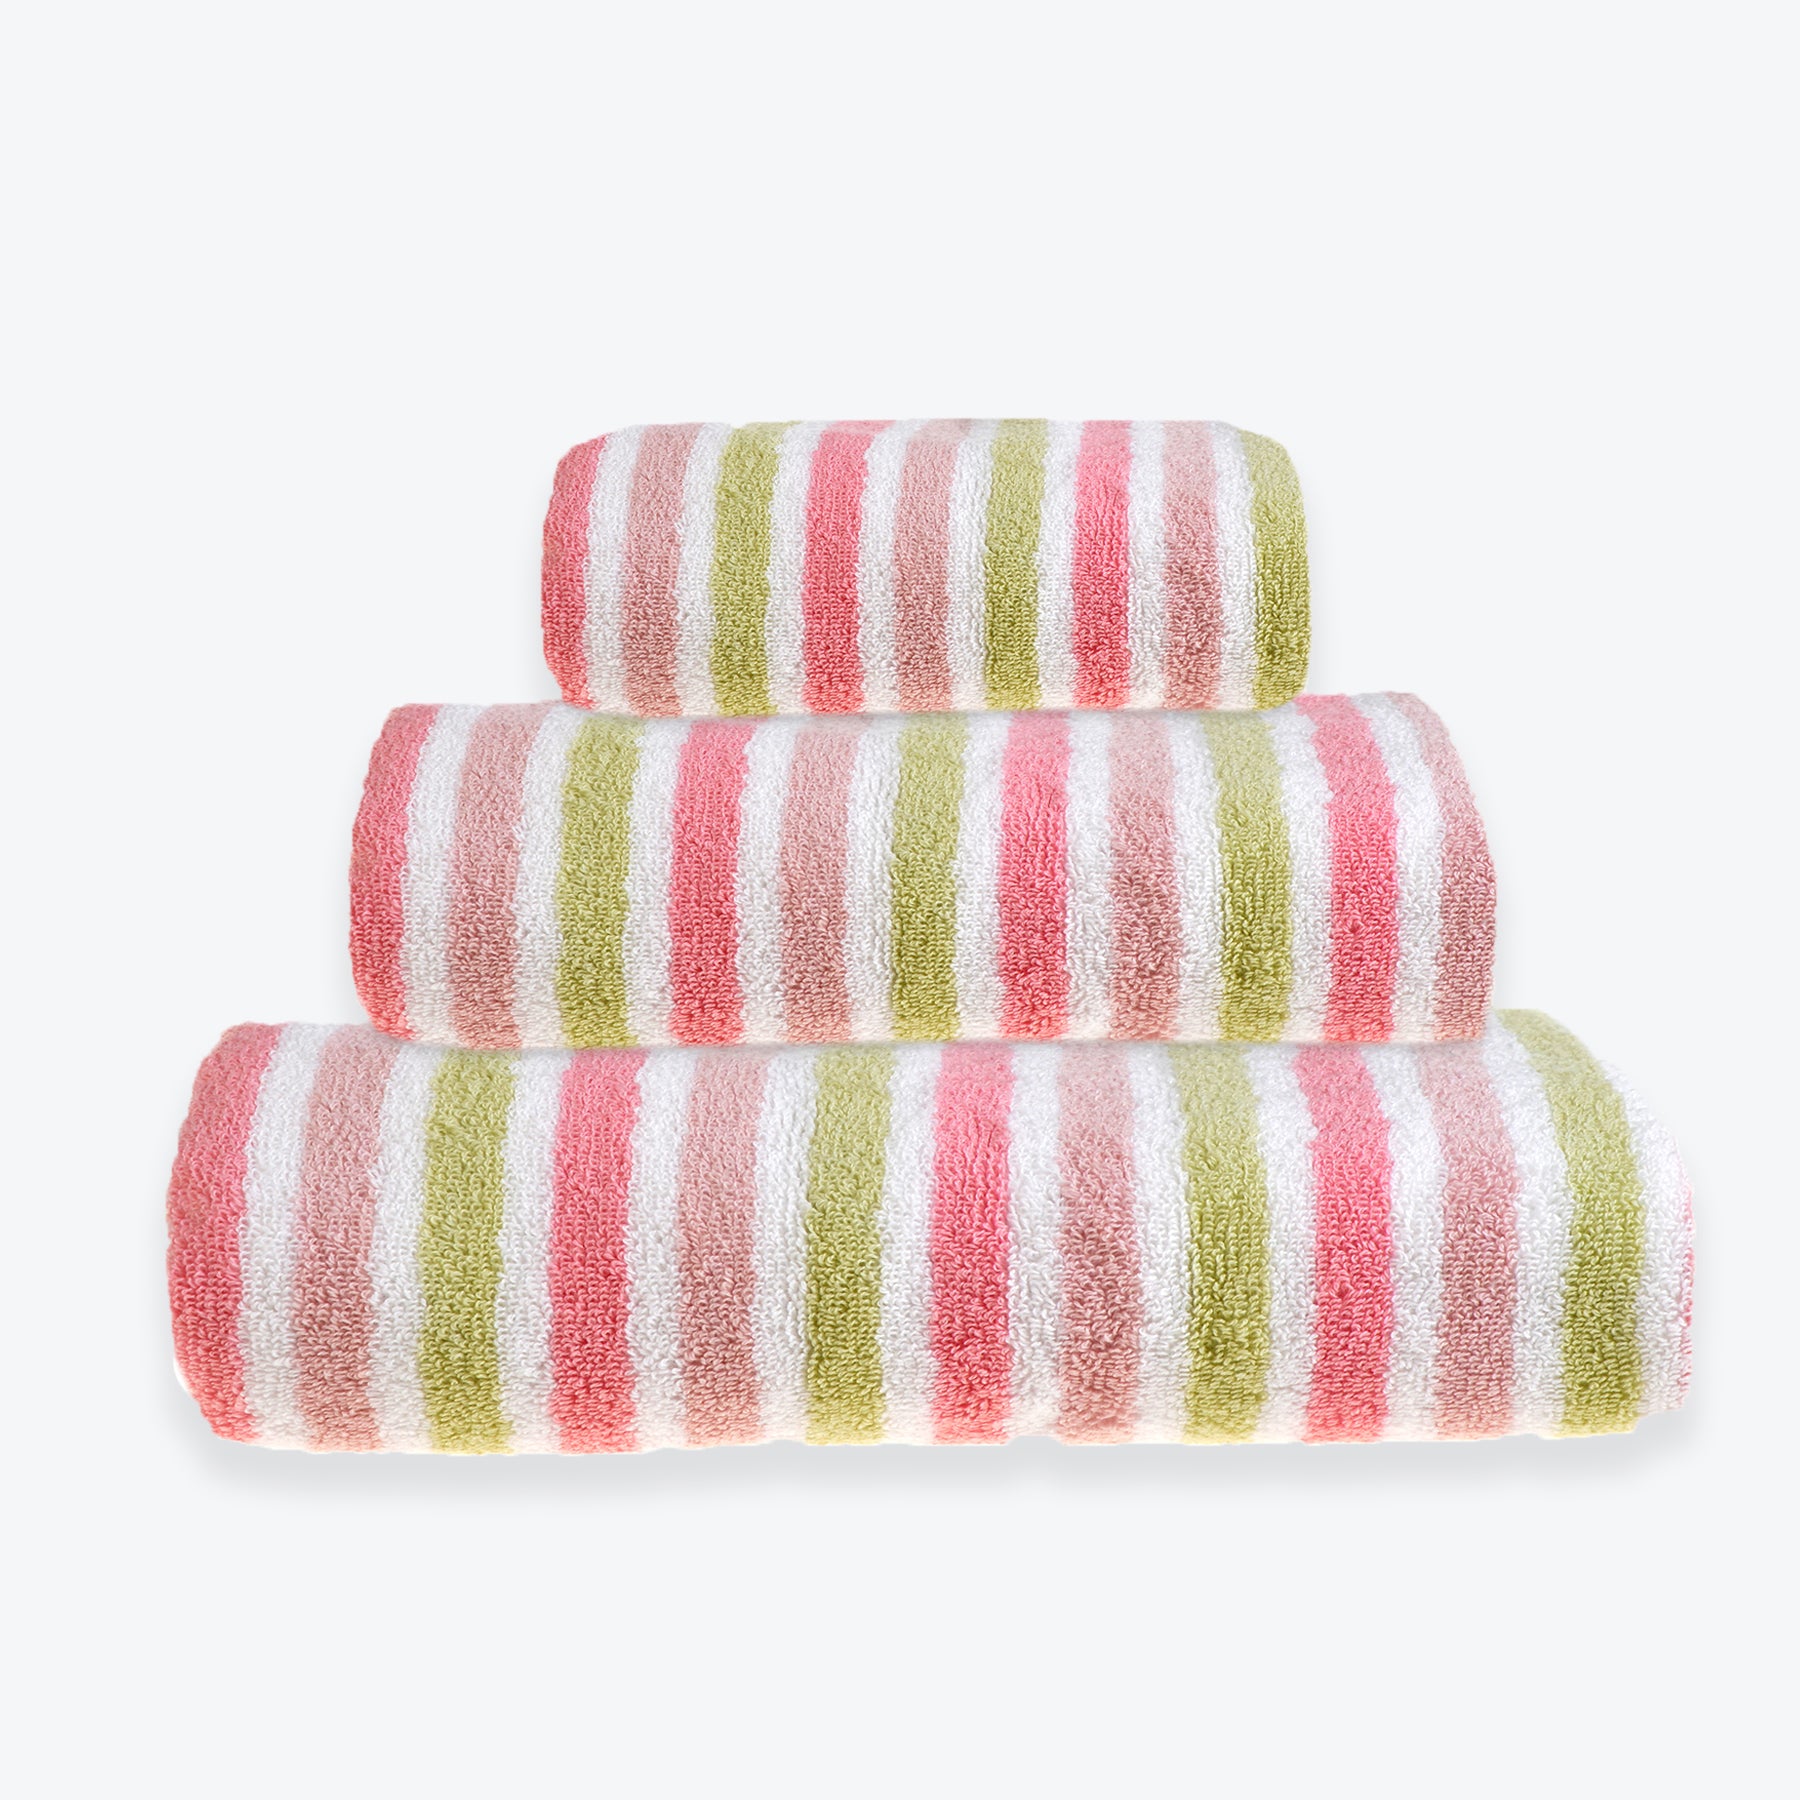 Patterned Bathroom Towels - Pink Striped Towels